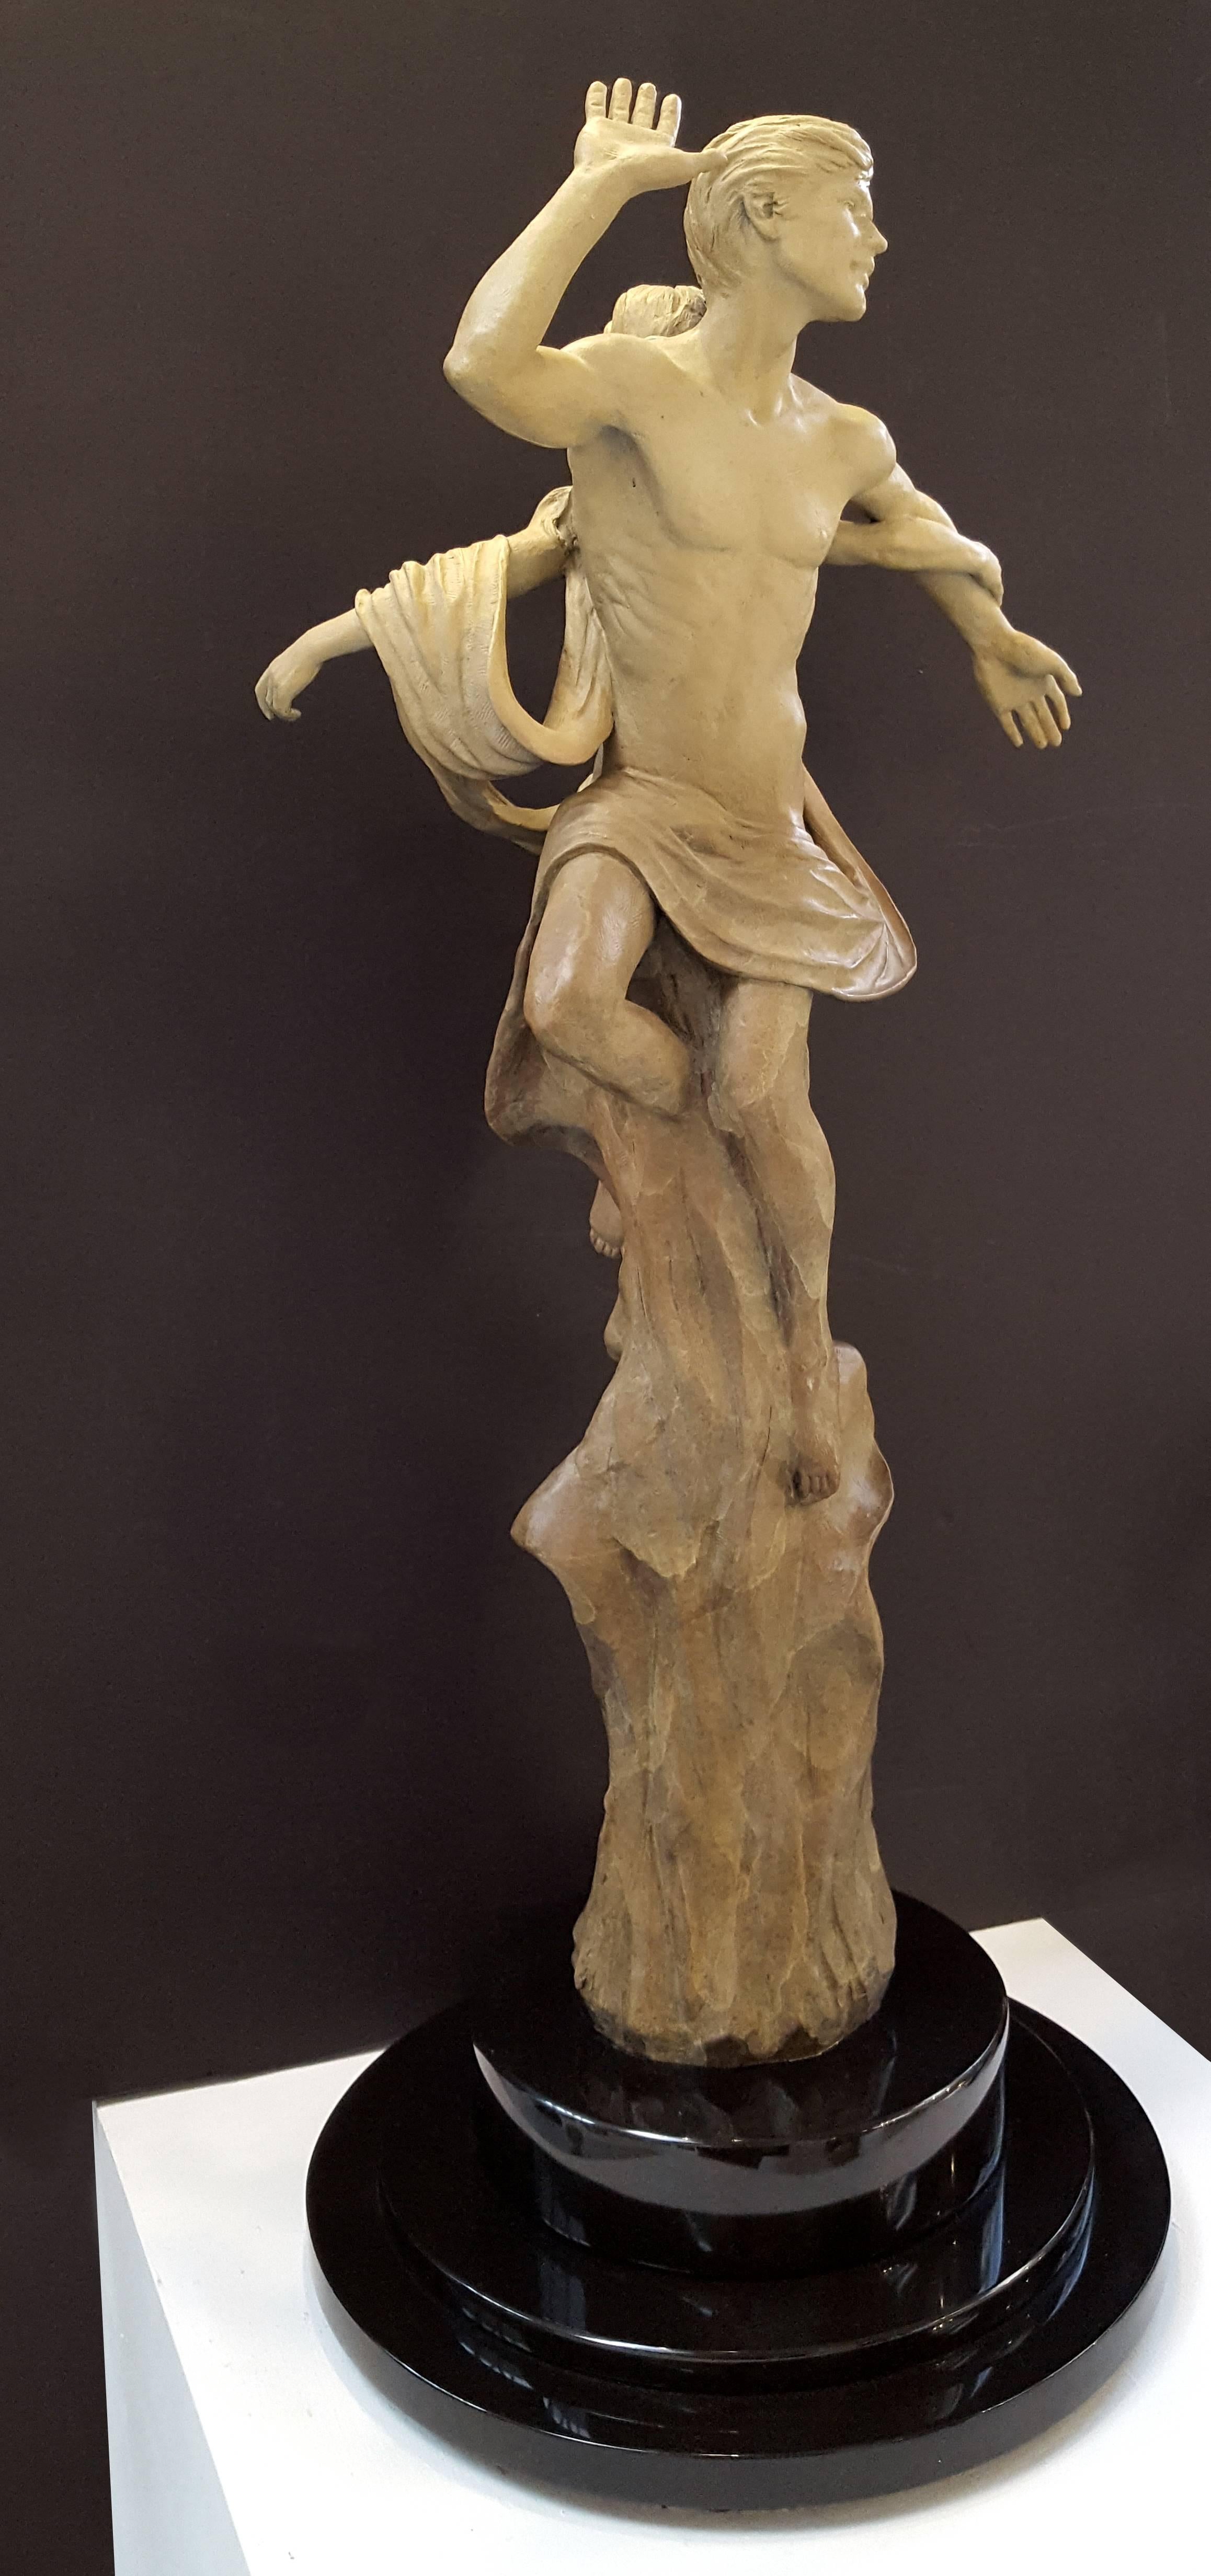 Dance of Life - Romantic Sculpture by Marsha Gertenbach